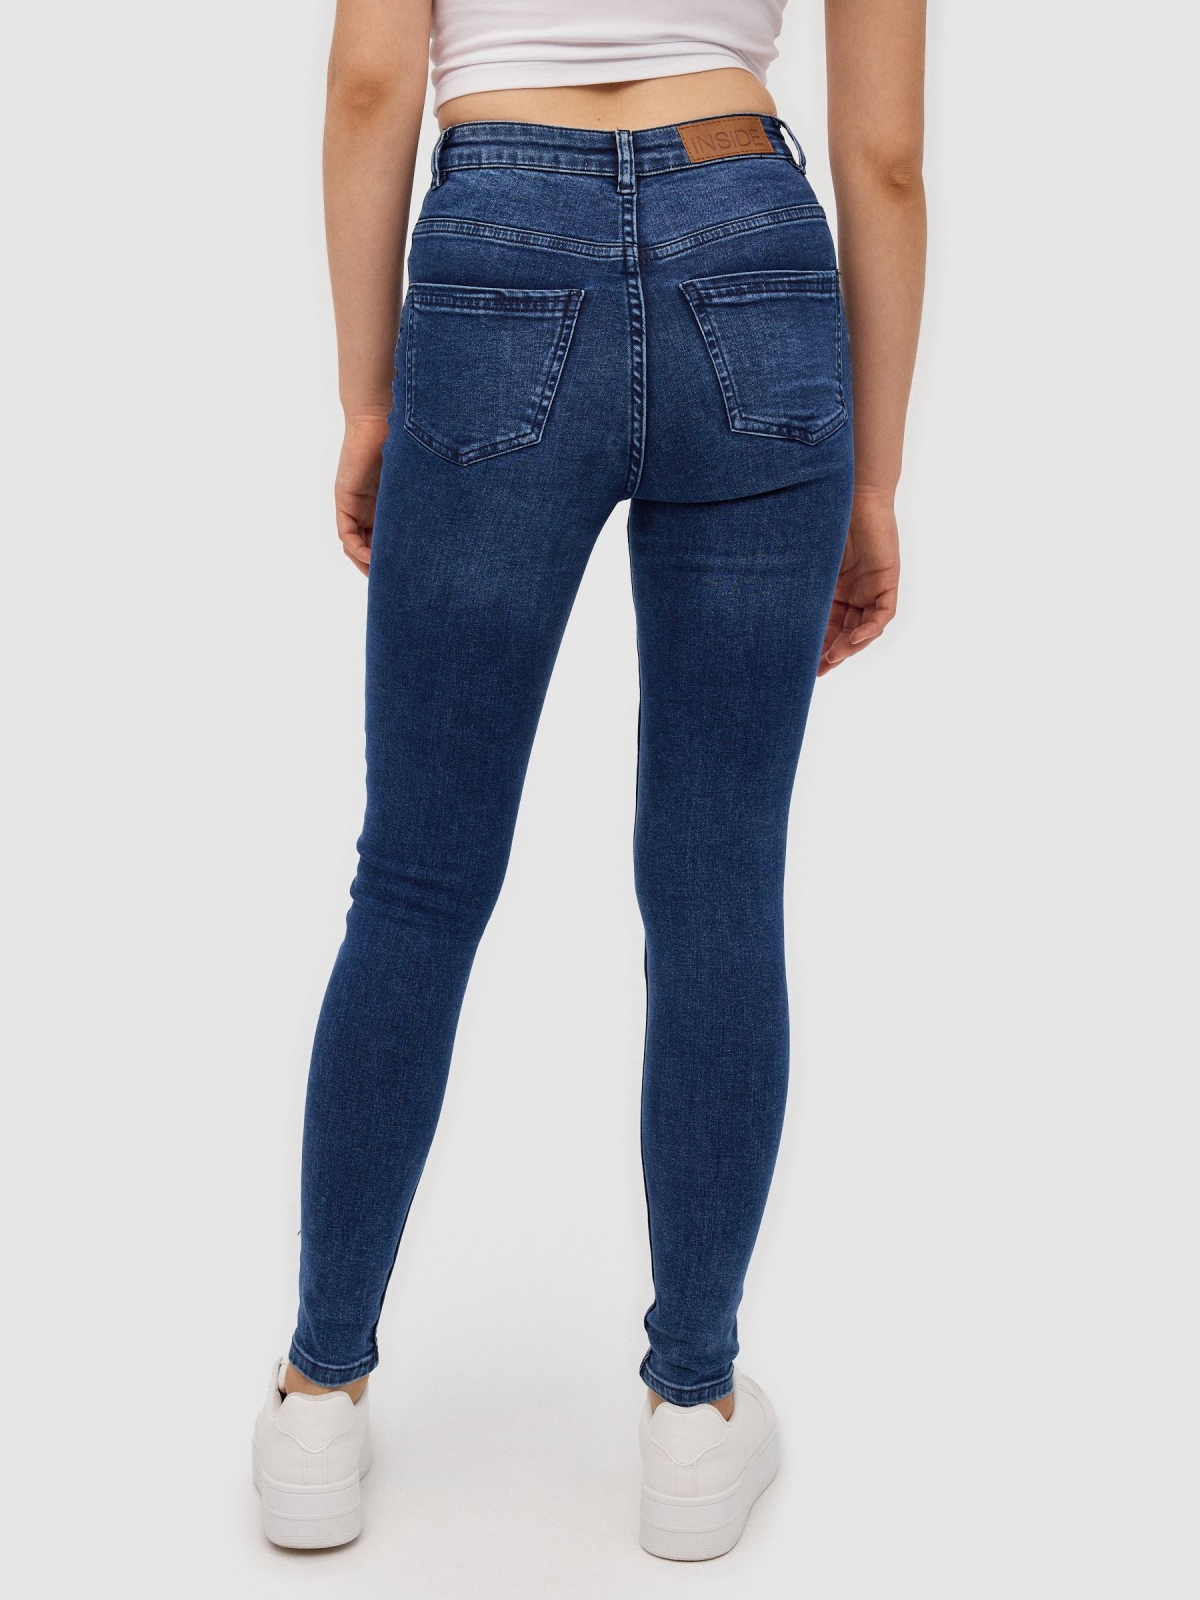 Jeans skinny básicos azul azul vista media trasera